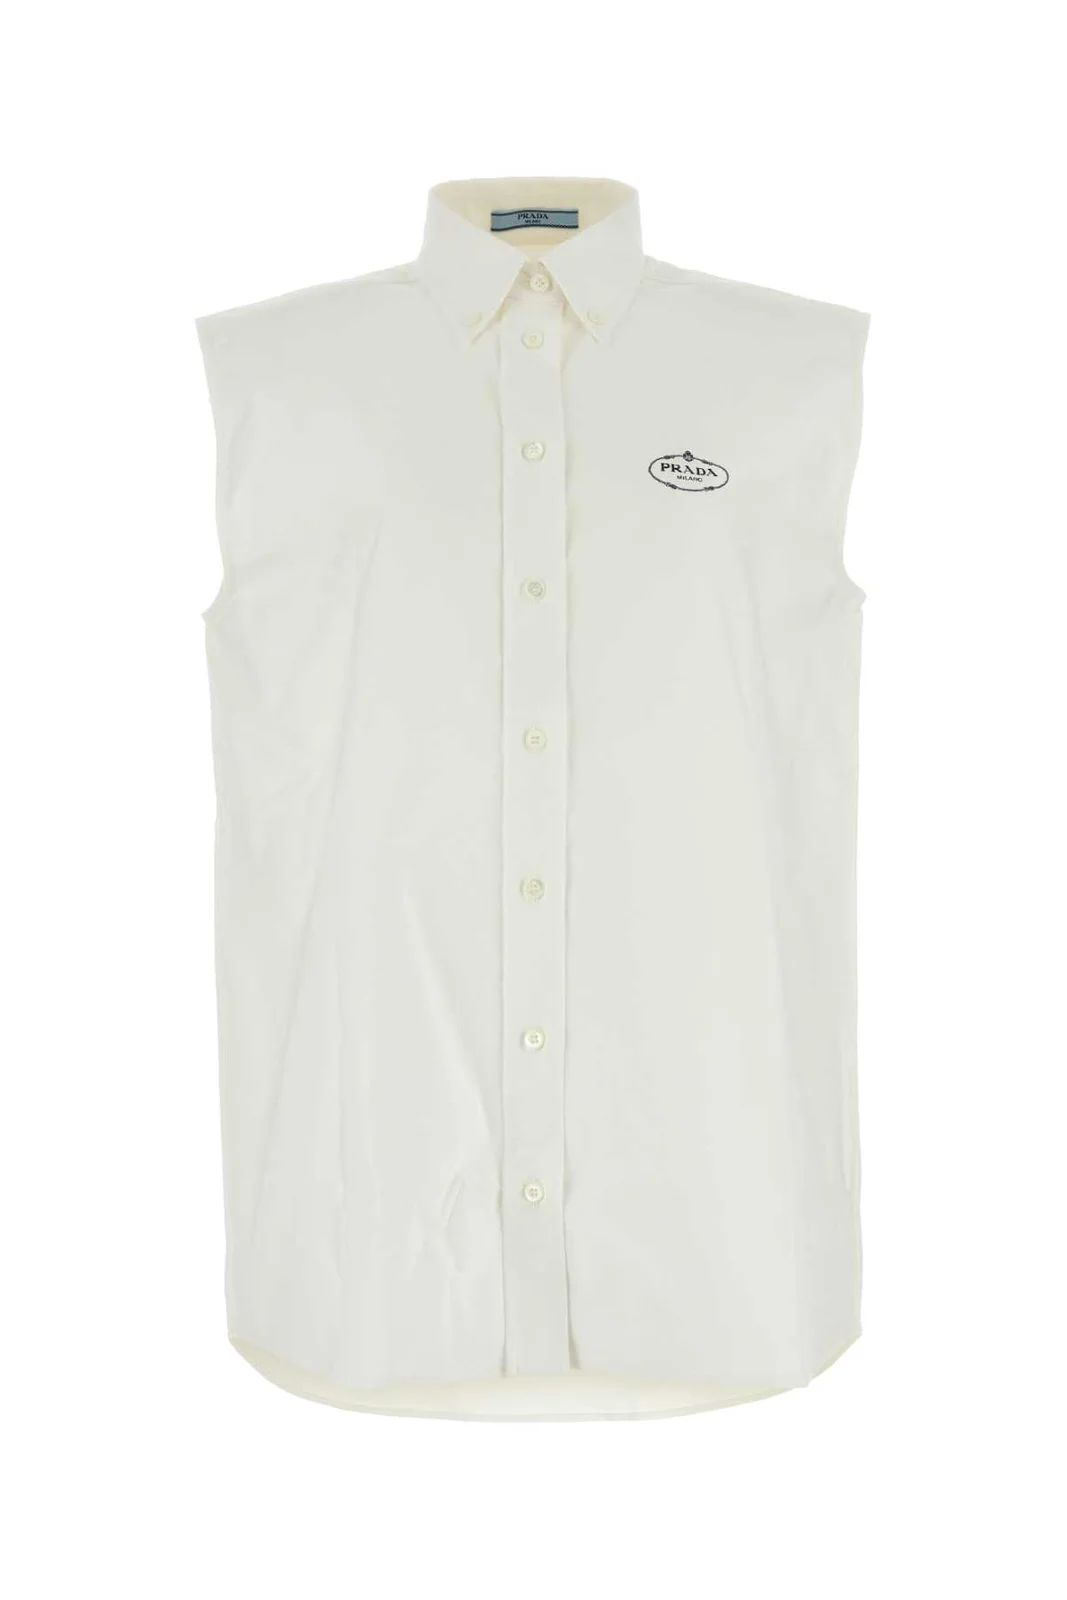 Prada Button-Up Sleeveless Shirt | Cettire Global